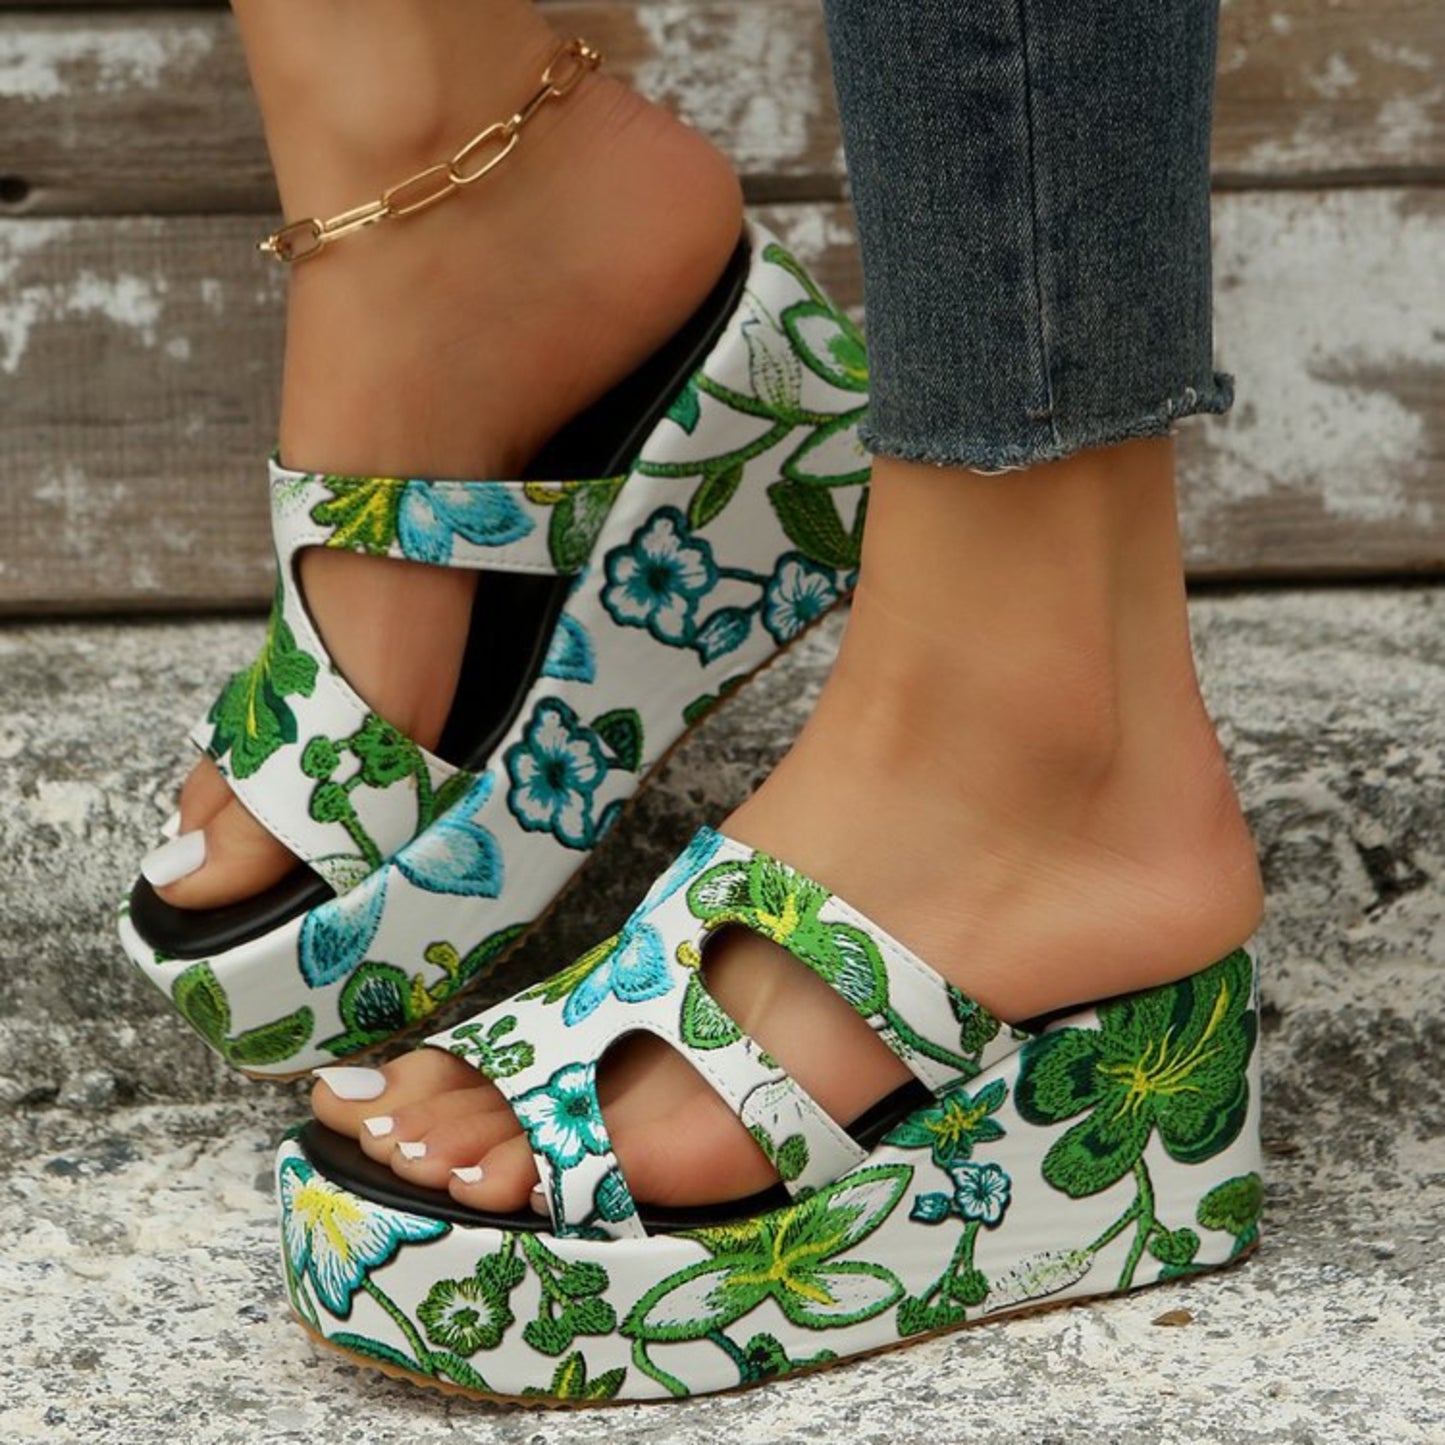 TEEK - Cutout Floral Peep Toe Sandals SHOES TEEK Trend Mid Green 4 